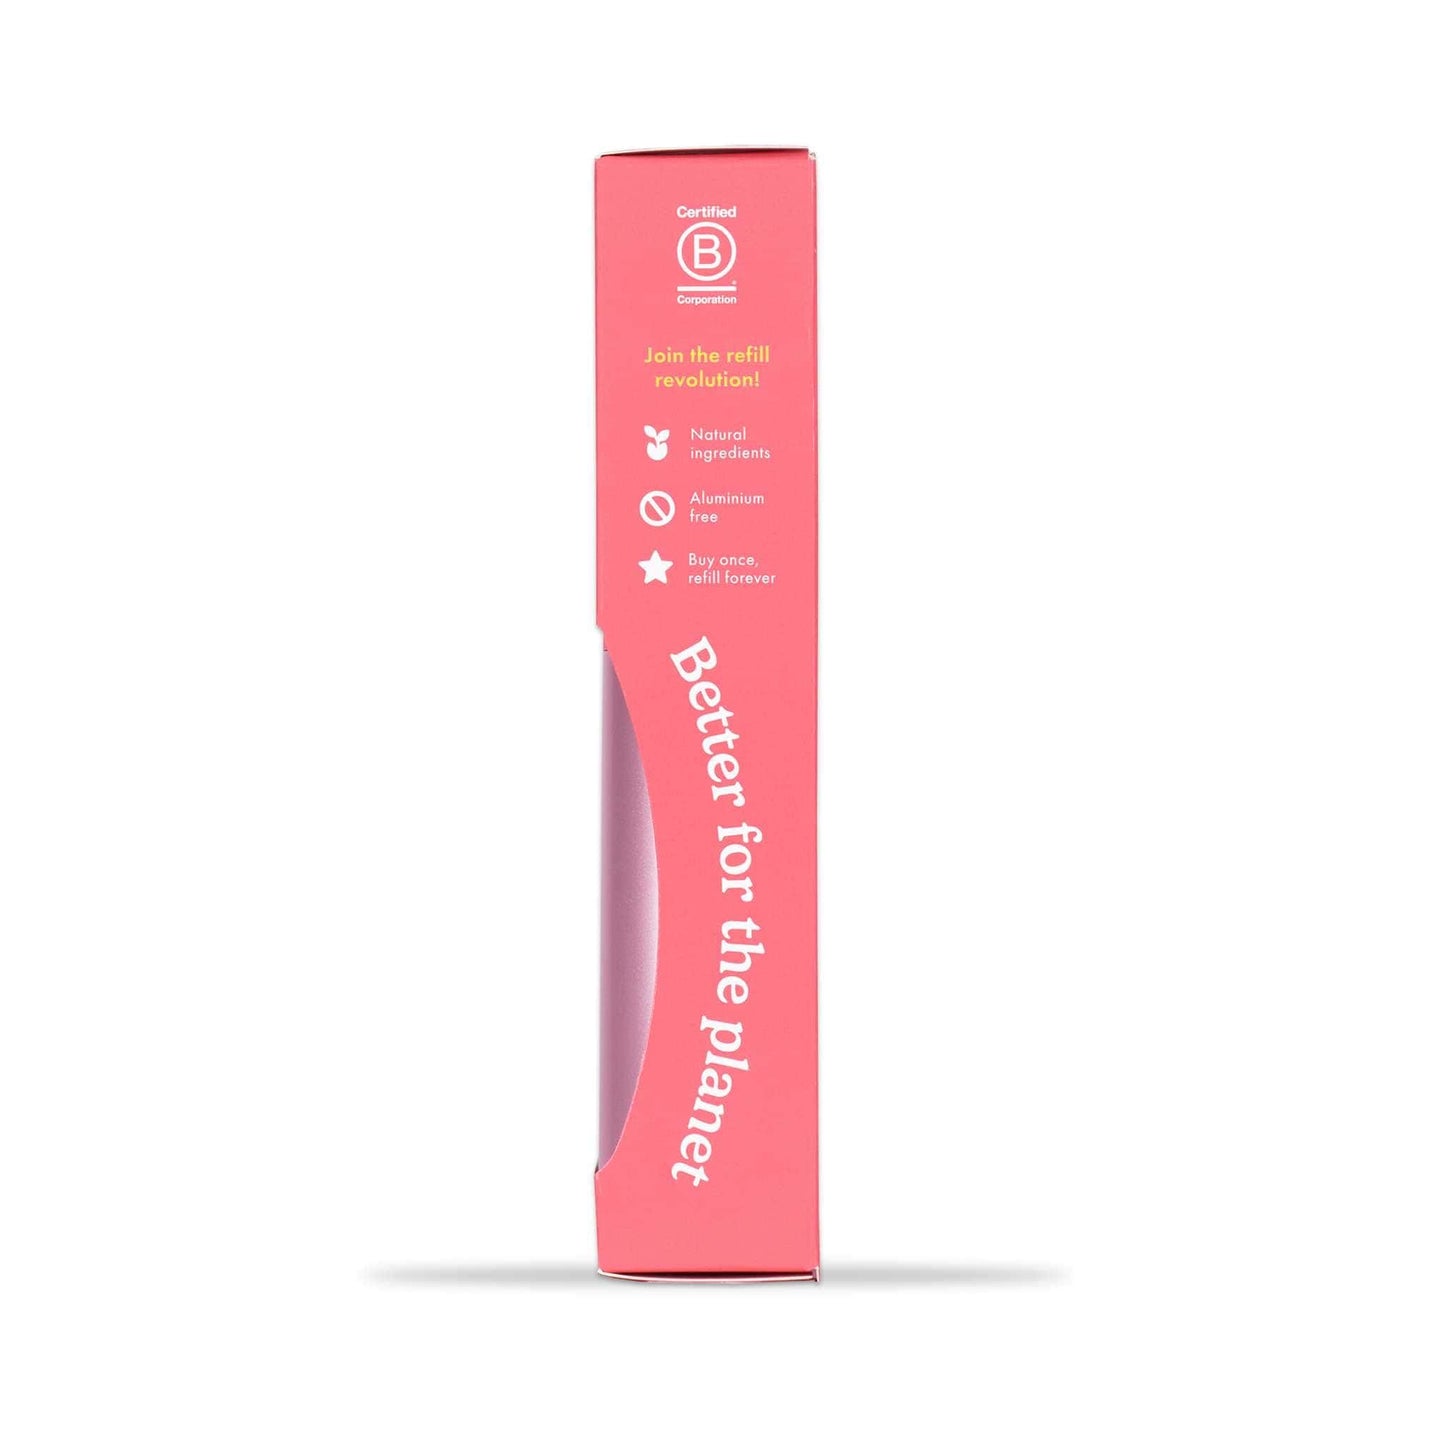 Wild Deodorant Wild Pink Case and Jasmine & Mandarin Blossom Natural Deodorant Starter Pack